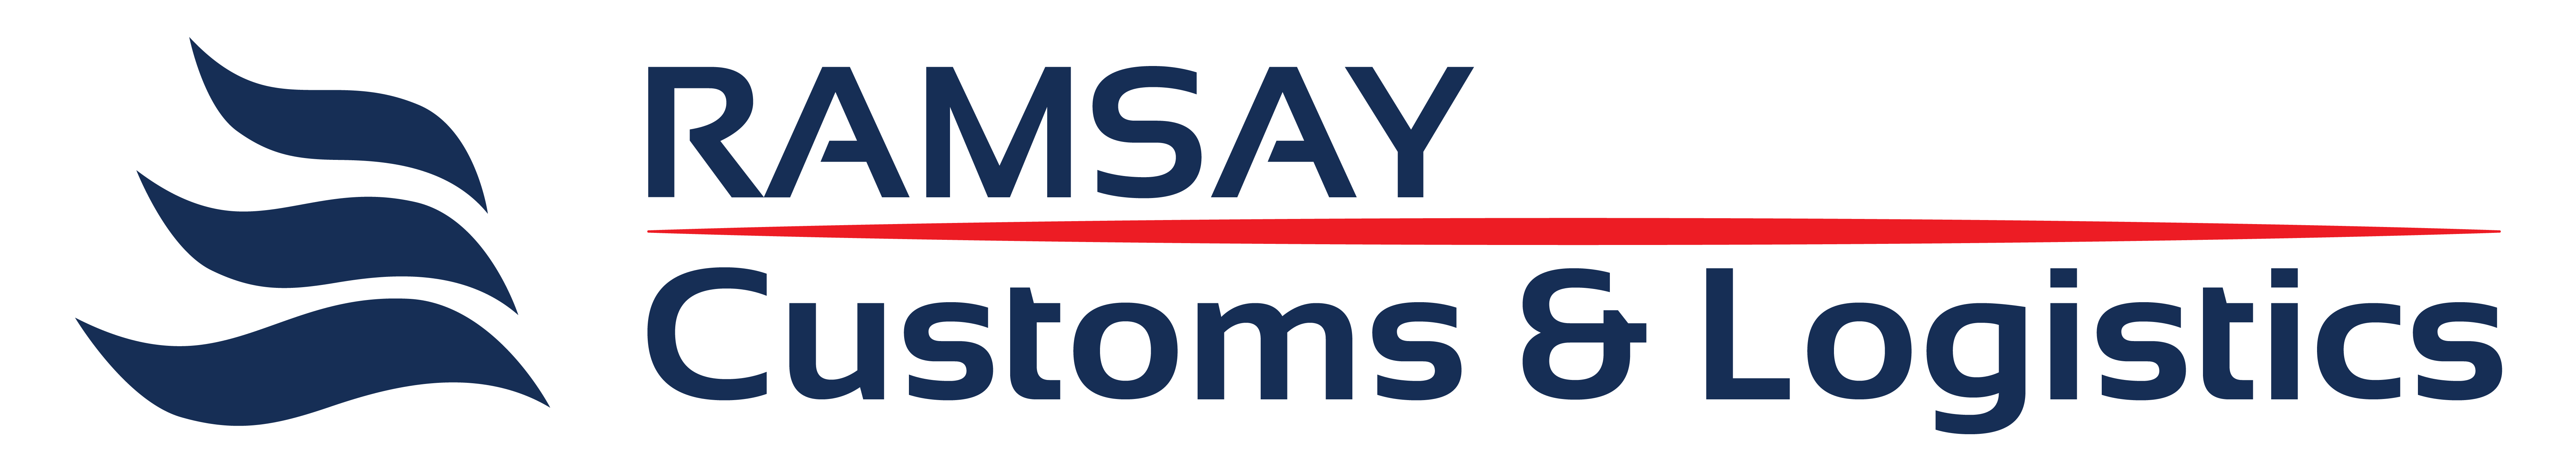 Ramsay Logistics Ltd.